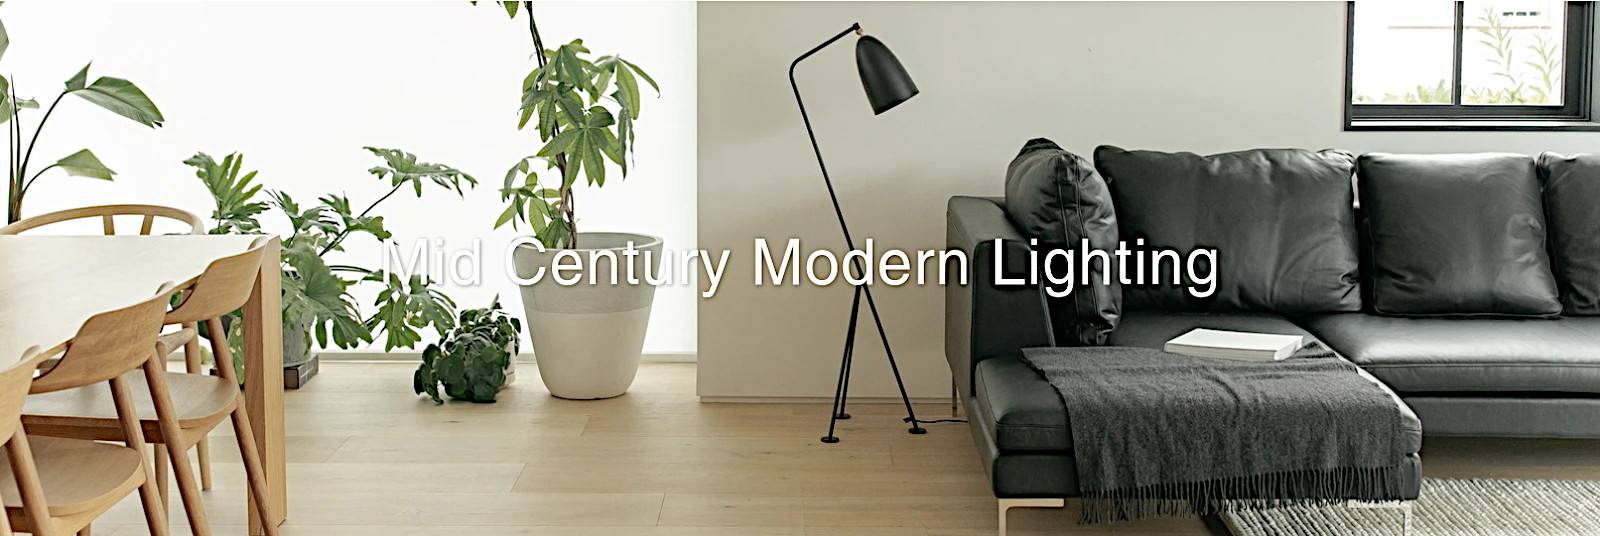 mid century modern lighting affordable price